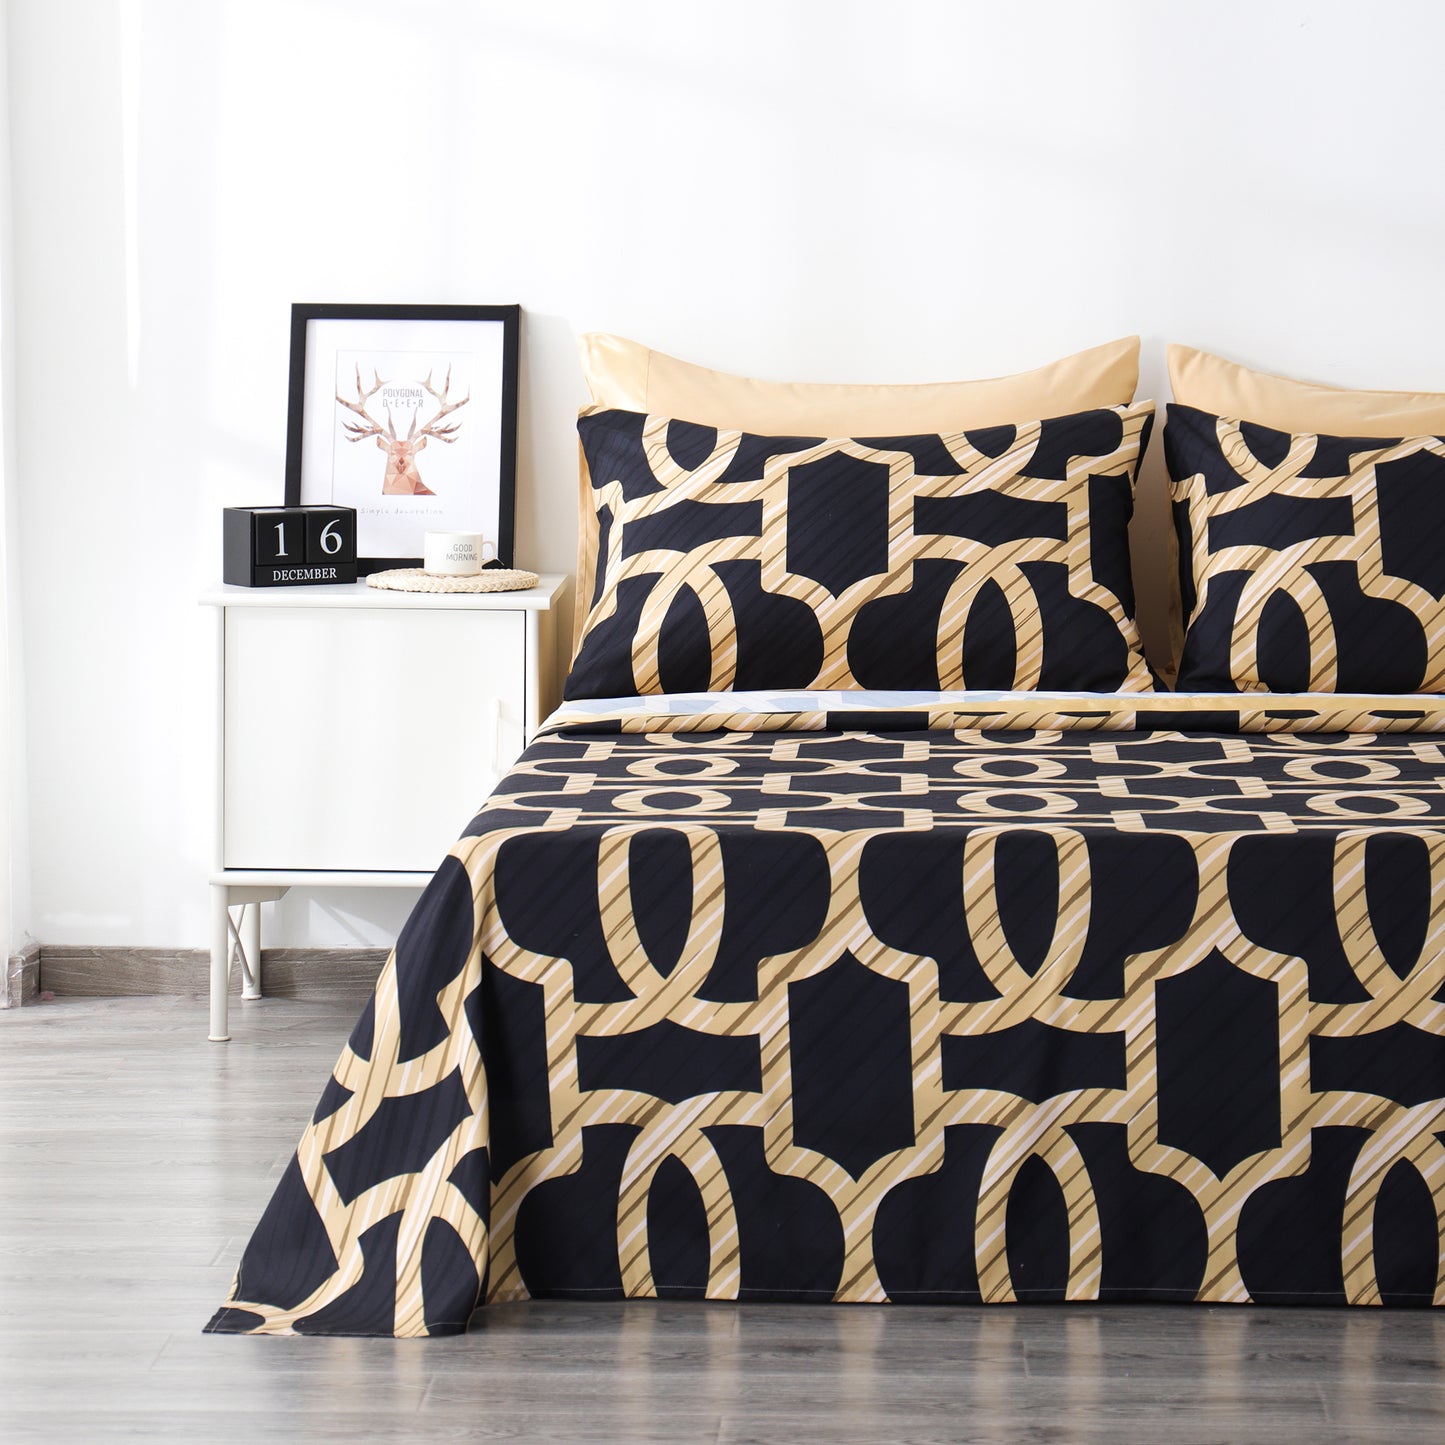 6 Piece Bed Sheet set-Black Gold